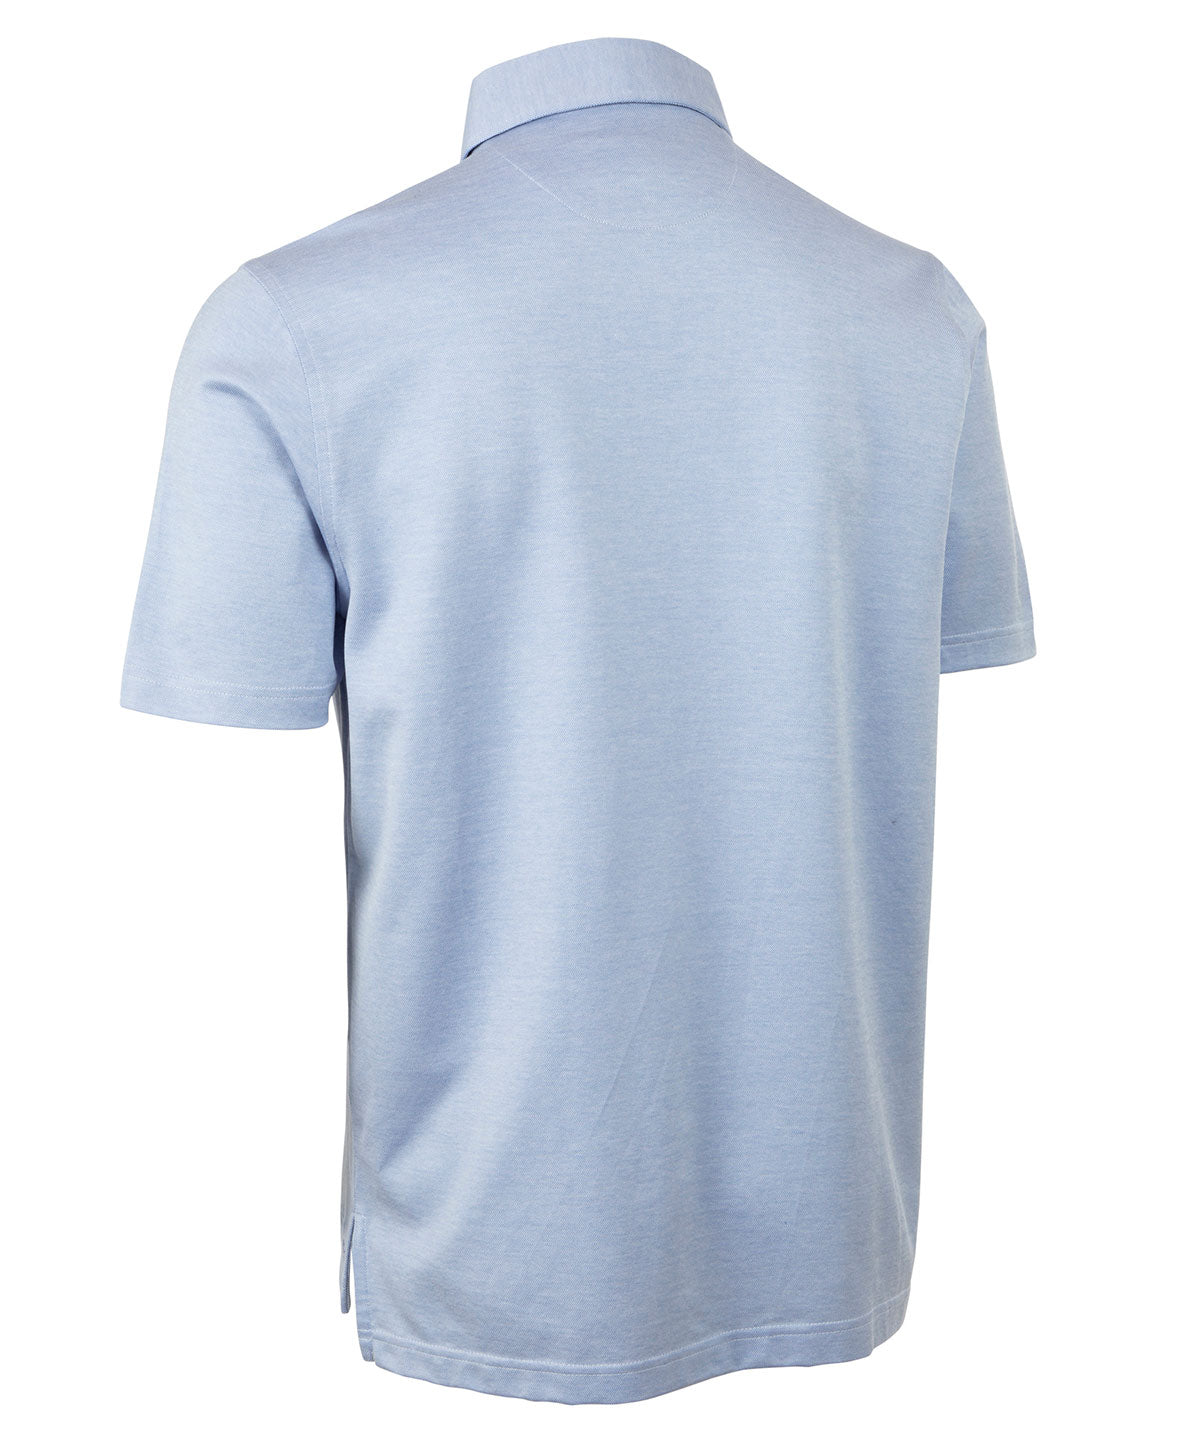 Signature Cotton Knit Short-Sleeve Cabana Sport Shirt